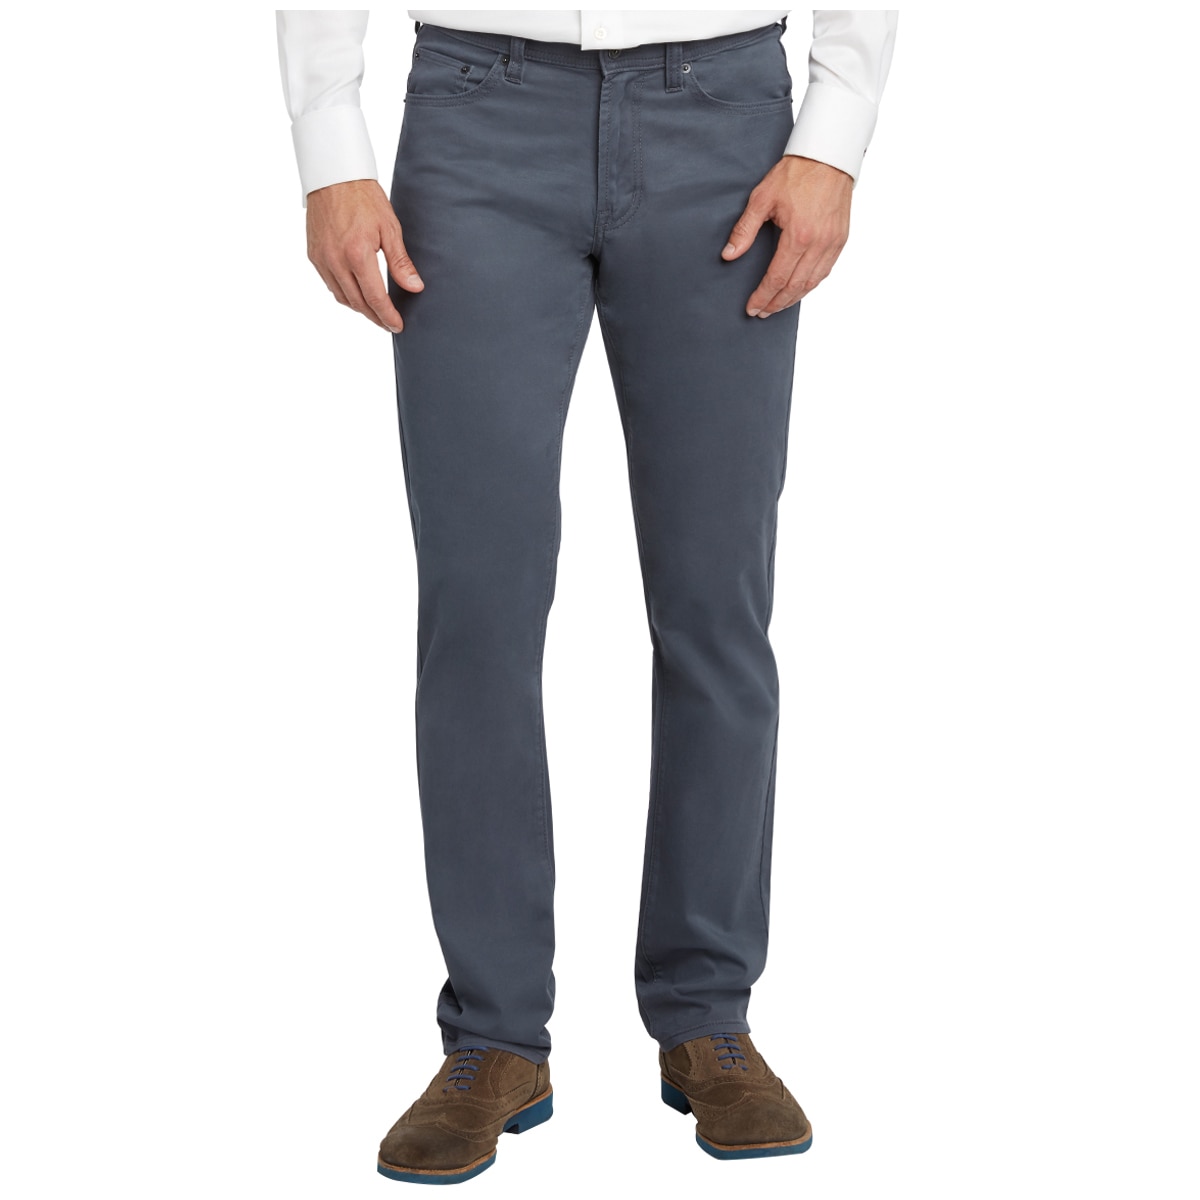 Kirkland Signature Mens 5 Pocket Brushed Cotton Twill Pants Gray 32X30